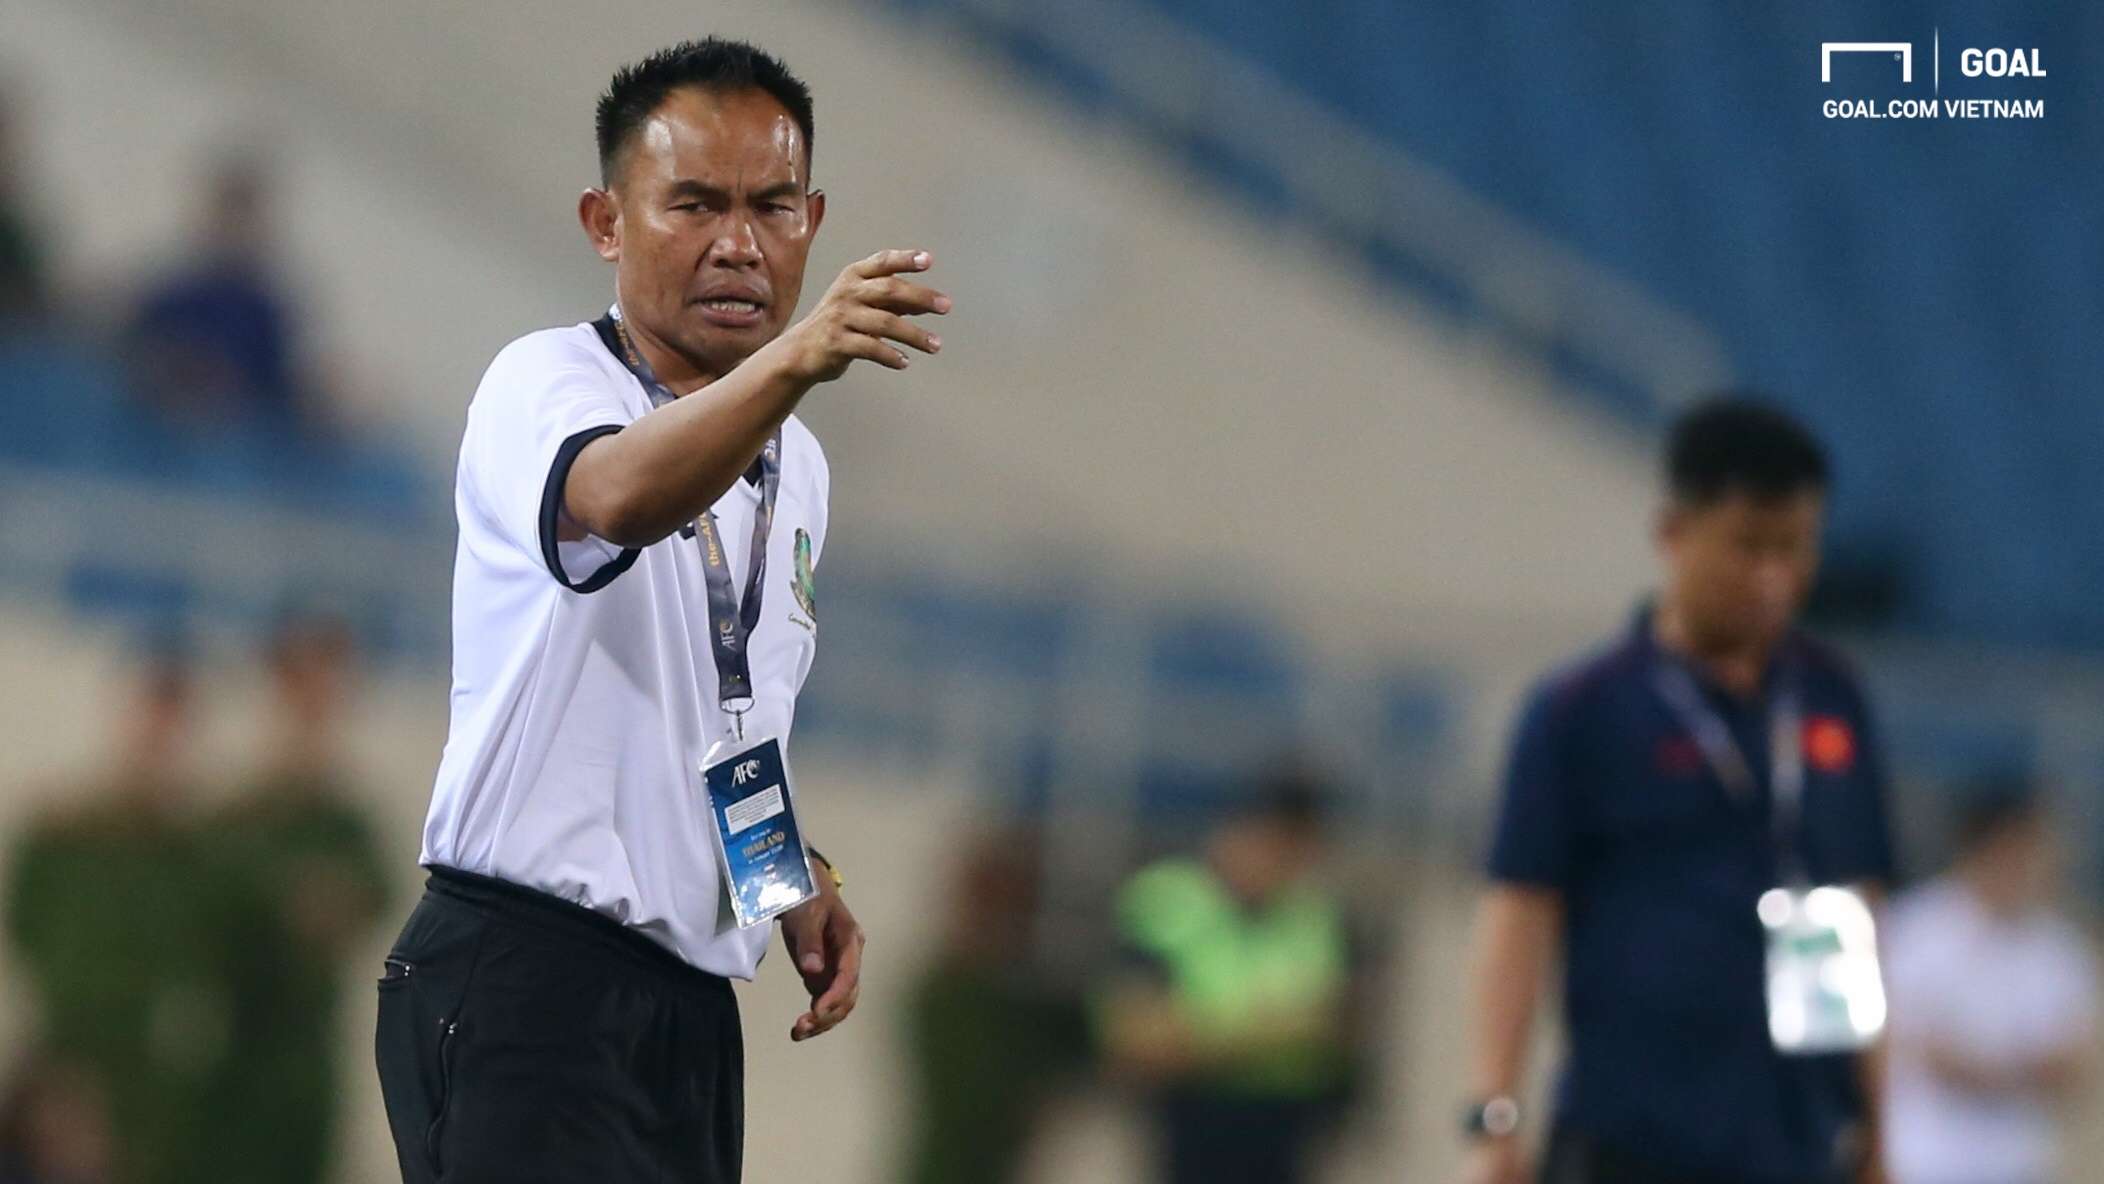 Coach Stephen Ng Heng Seng U23 Vietnam U23 Brunei AFC U23 Championship qualifiers 2020